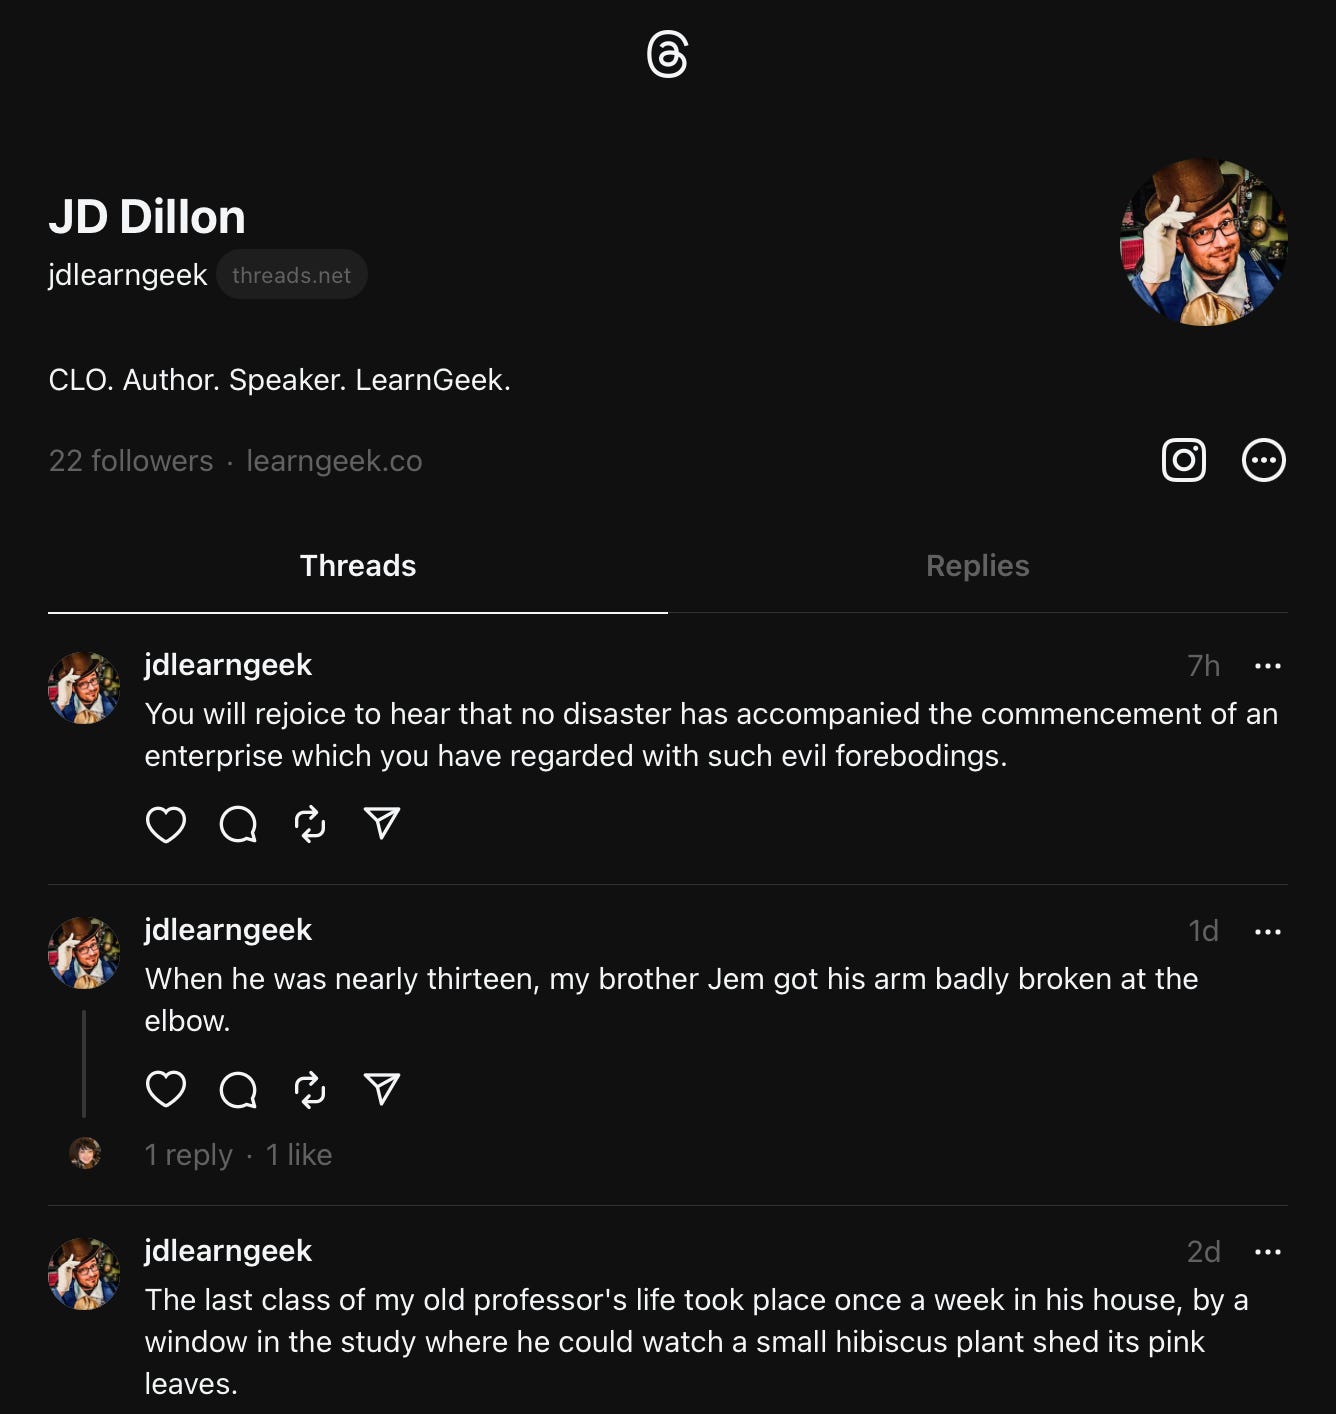 JD's account on Threads - jdlearngeek